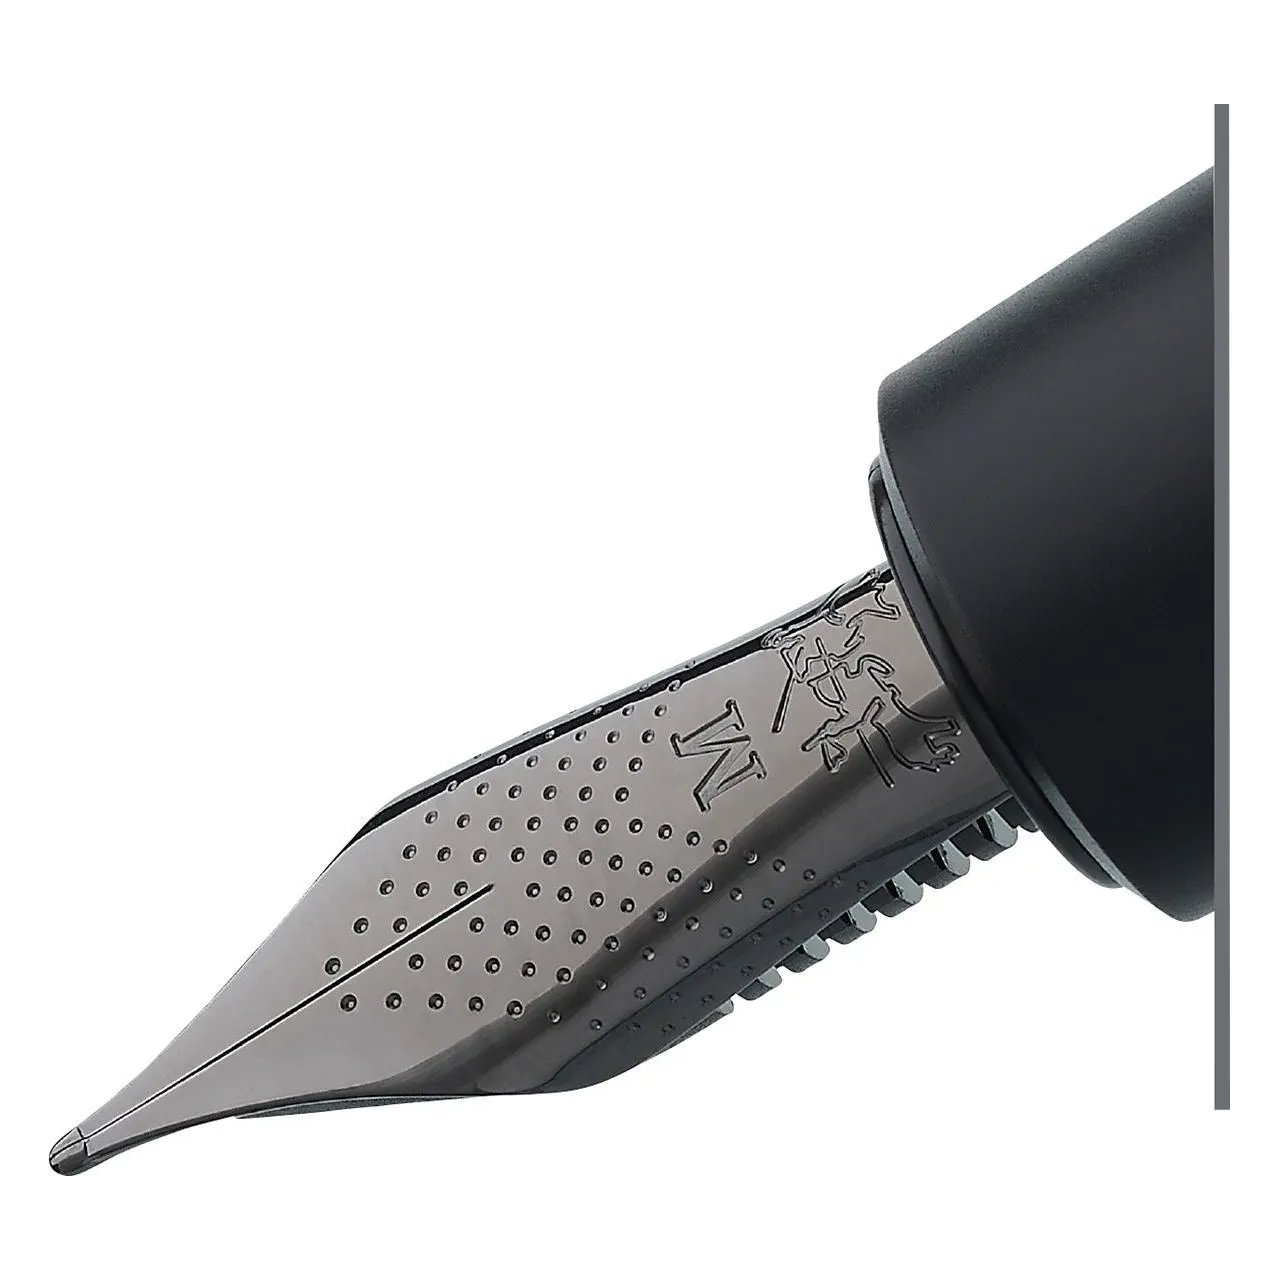 Faber Castell E-Motion Pure Black Fountain Pen - Pencraft the boutique